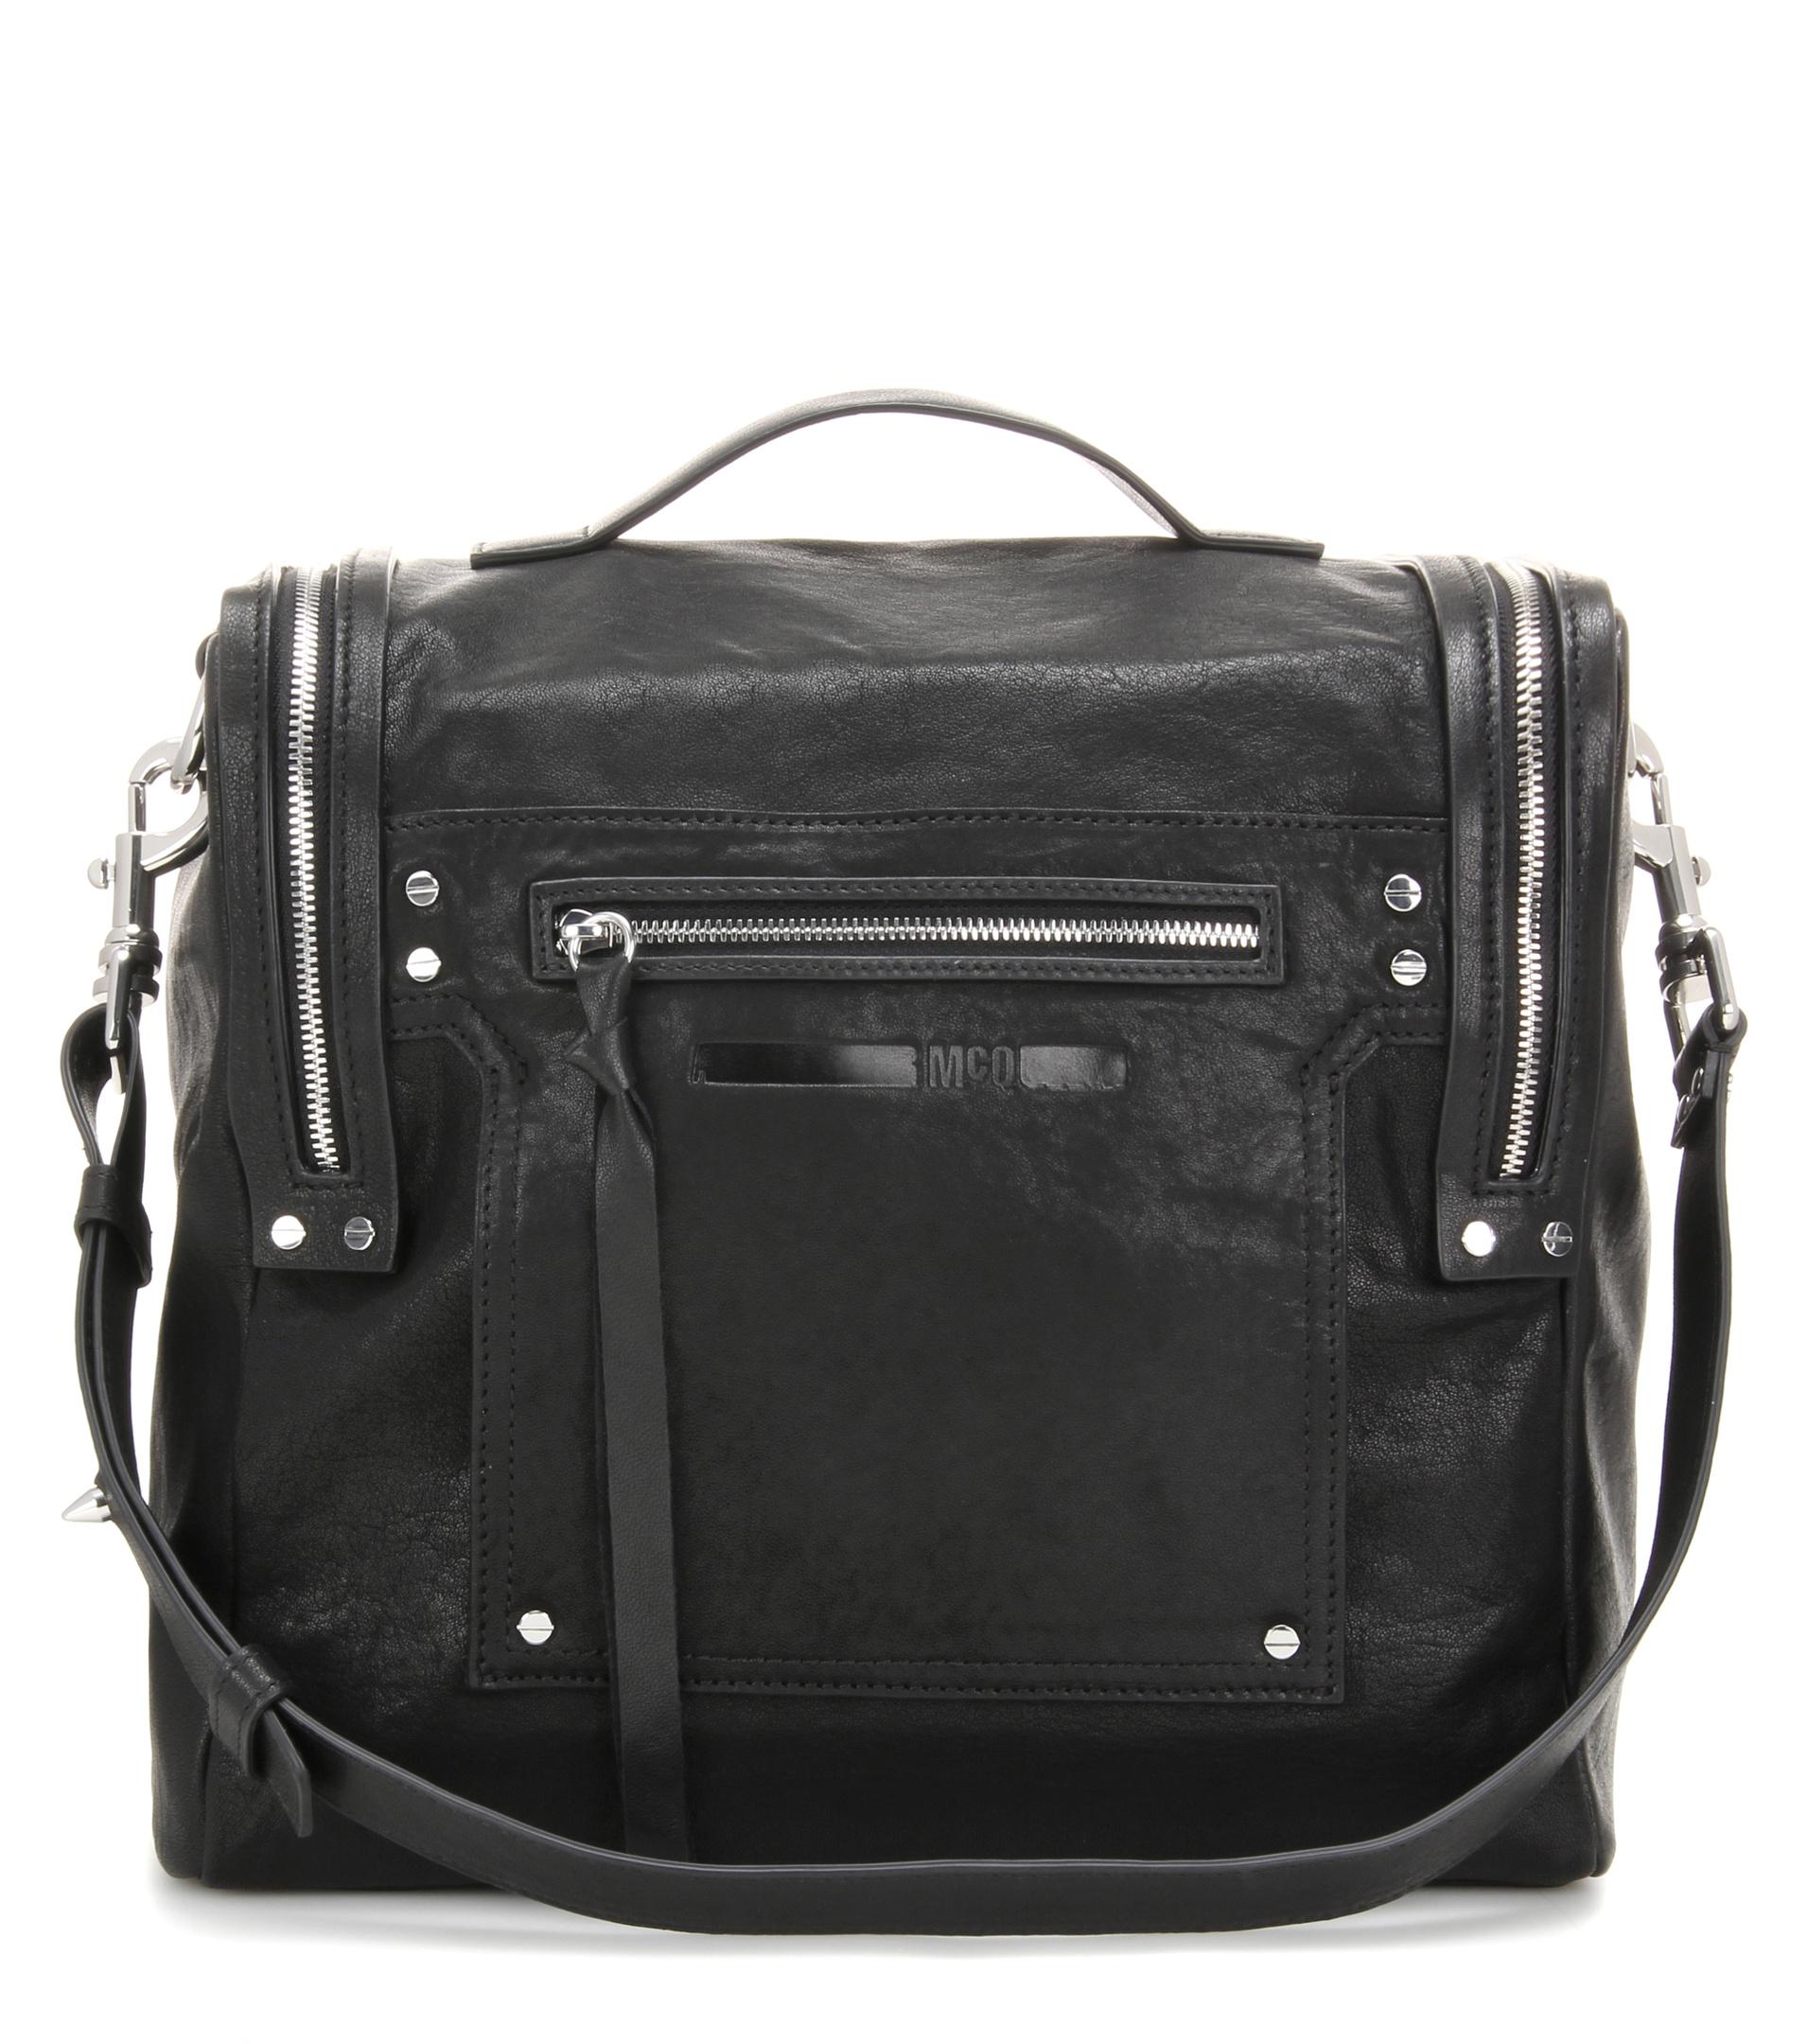 Lyst - Mcq Convertible Box Bag Loveless Leather Shoulder Bag in Black